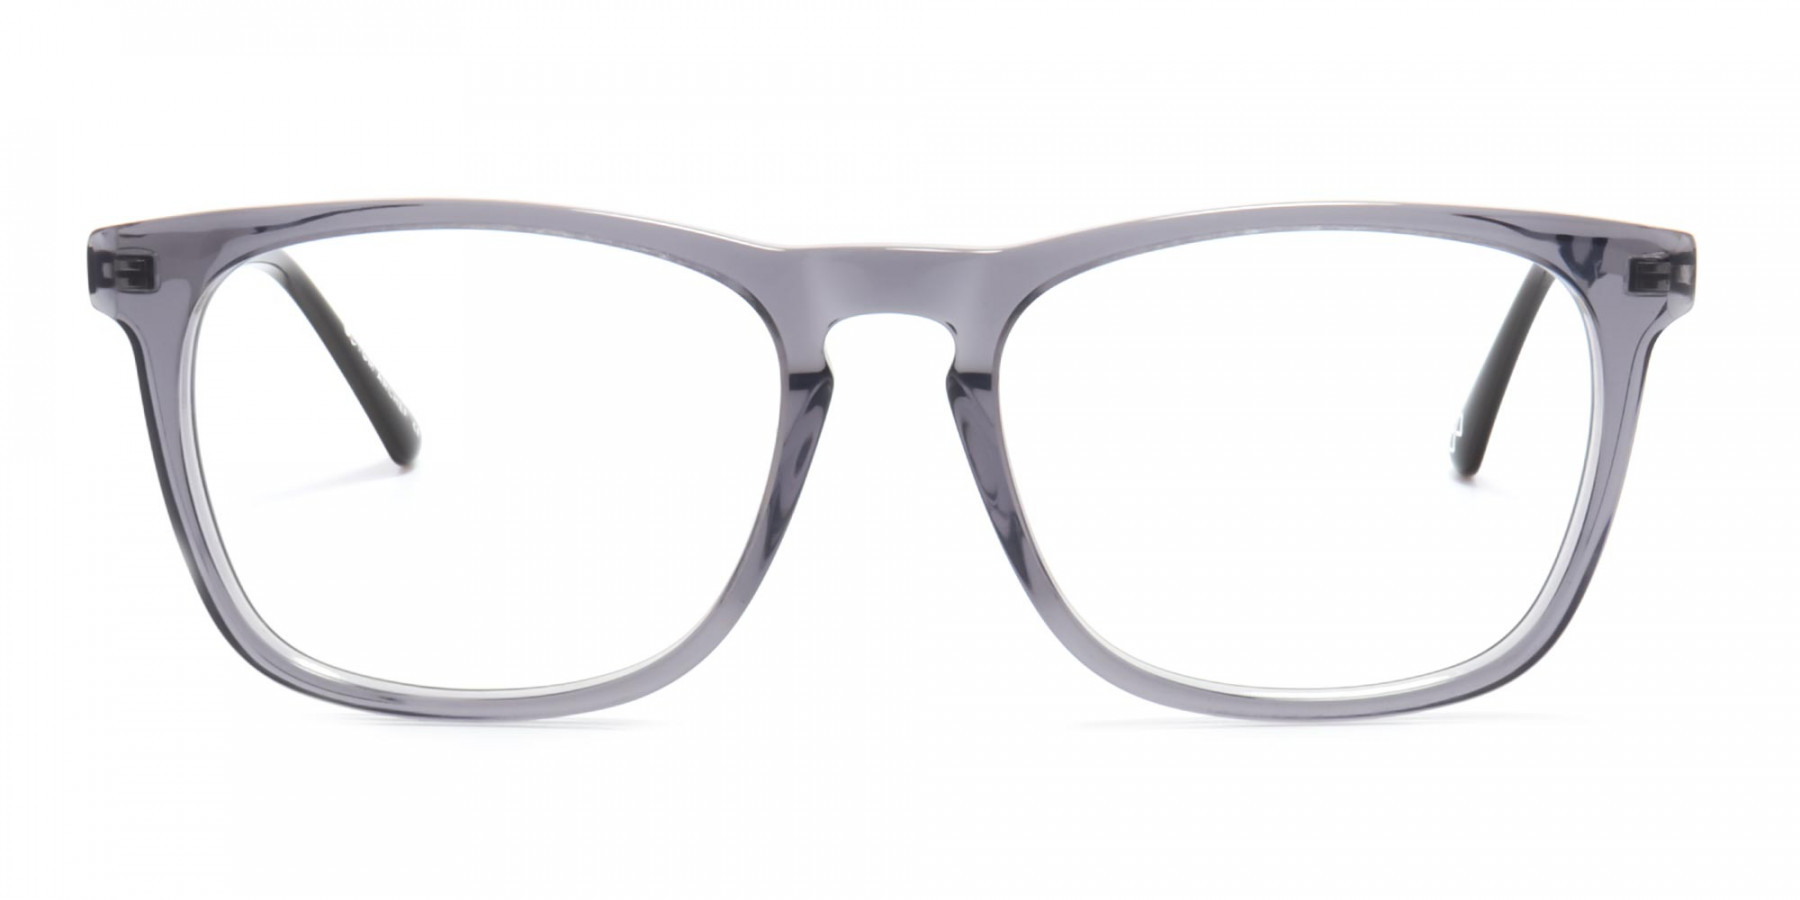 HENLEY 3 - Buy Grey and Black Glasses Frames | Specscart.®